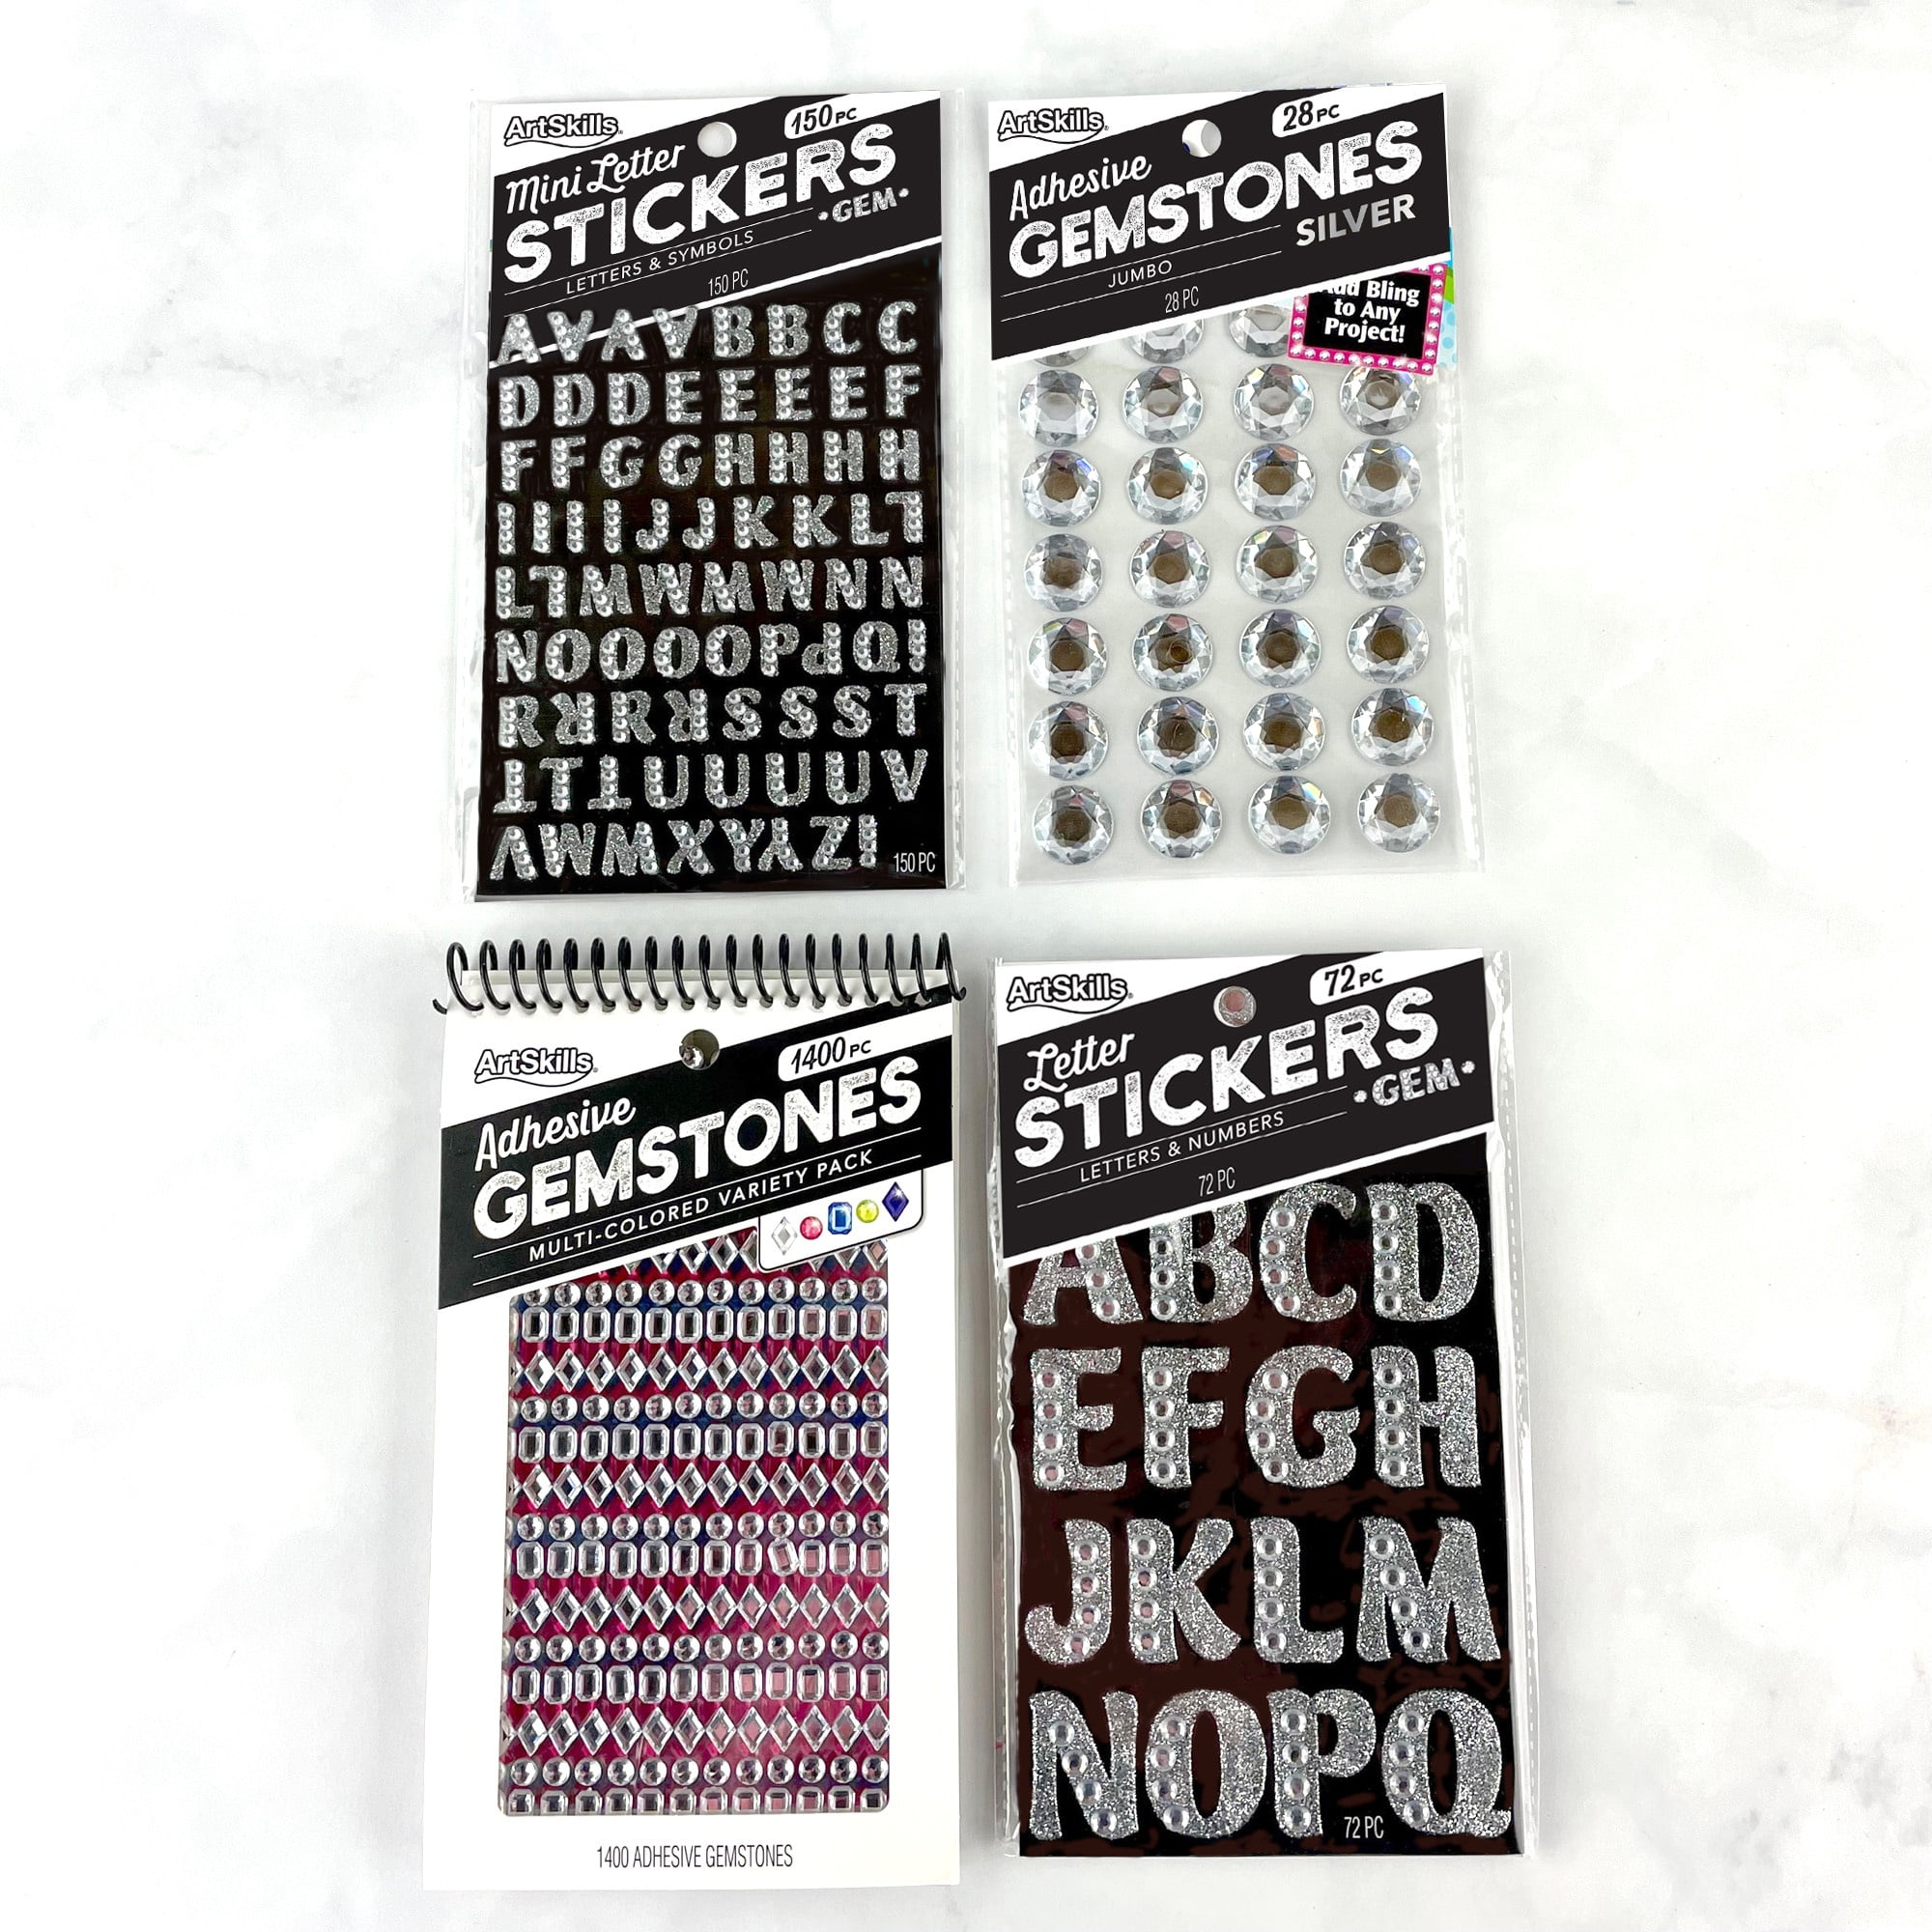 ArtSkills Silver Letter Gem Stickers - Shop Craft Basics at H-E-B